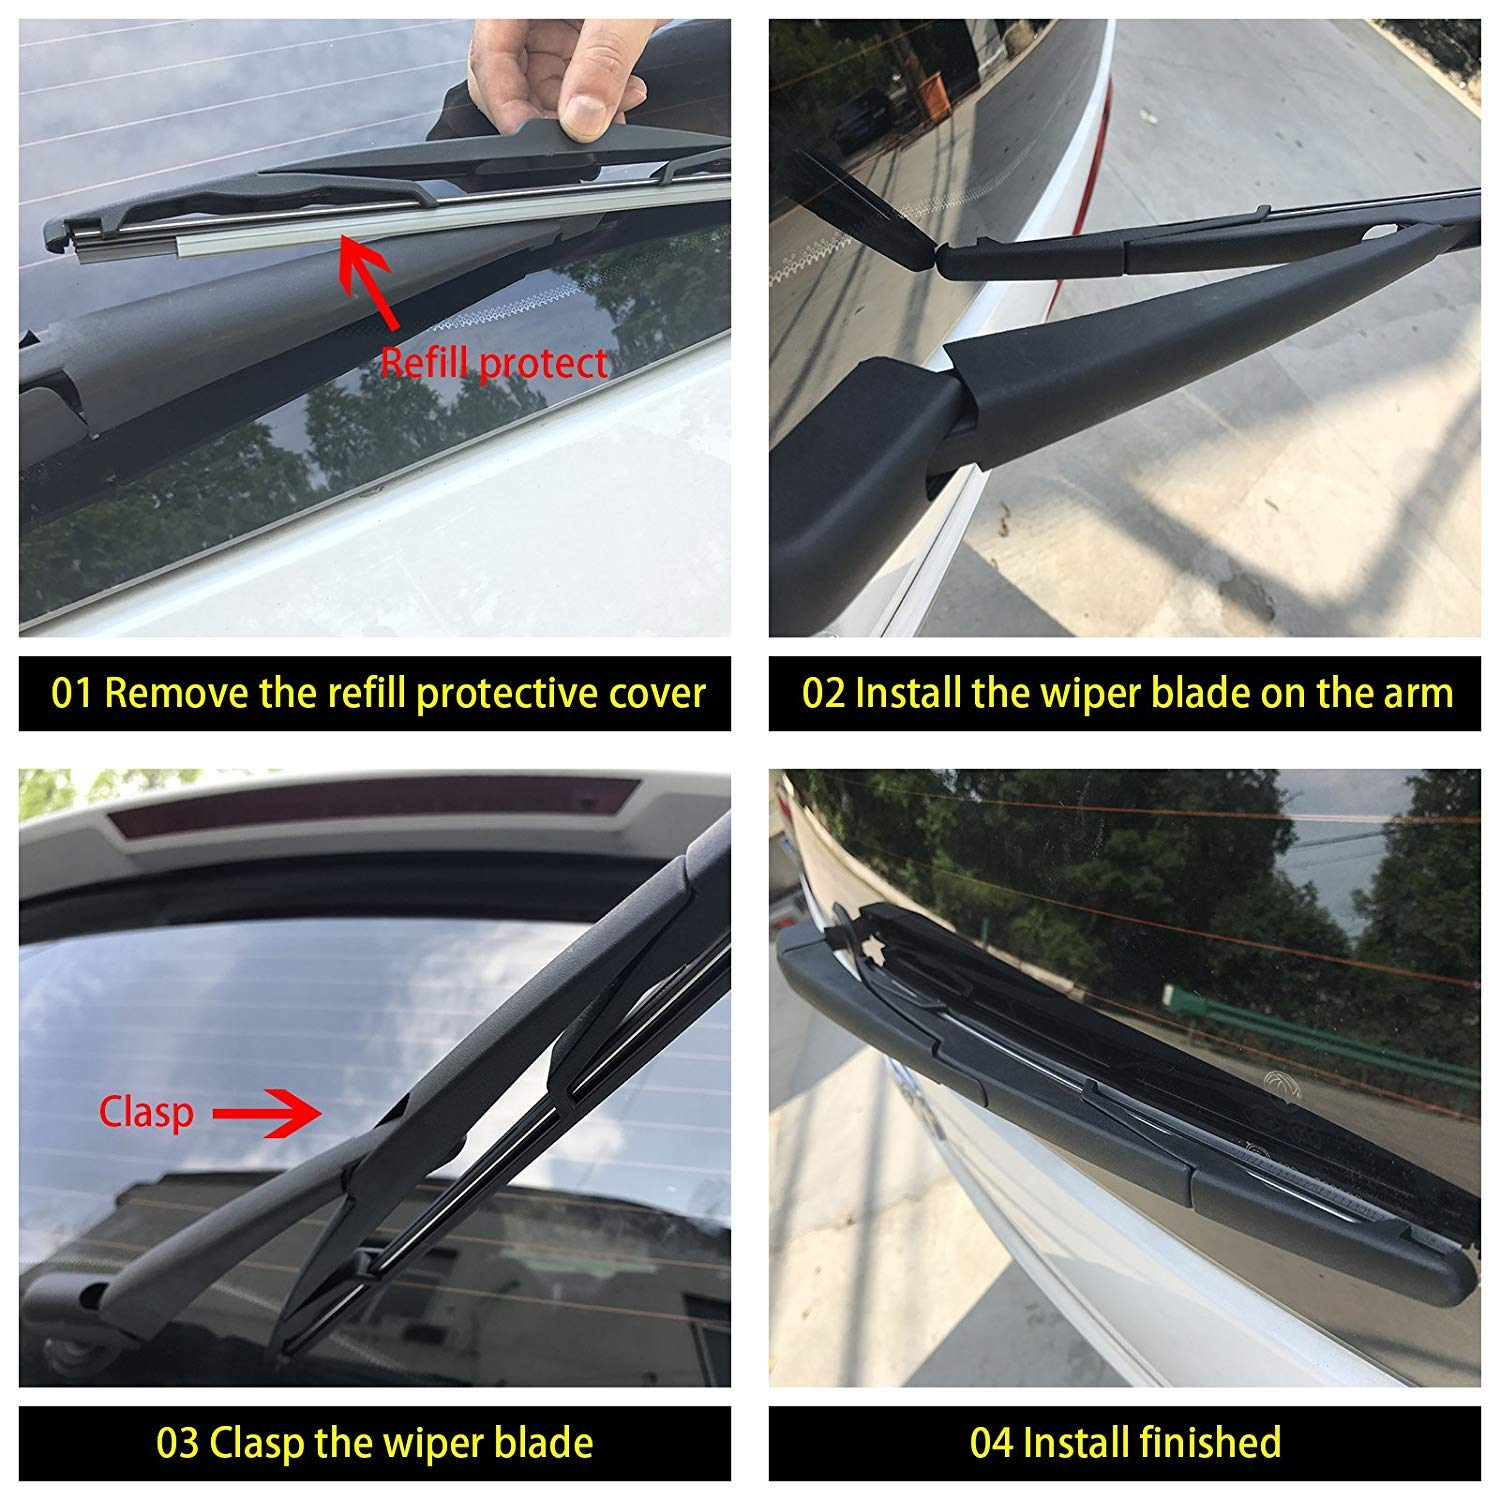 OTUAYAUTO Rear Windshield Wiper Blades - 2 Pieces of 12" Car Back Window Wiper - Replacement for Nissan Rogue Juke Pathfinder, Honda Civic, Infiniti QX60, Mercedes-Benz